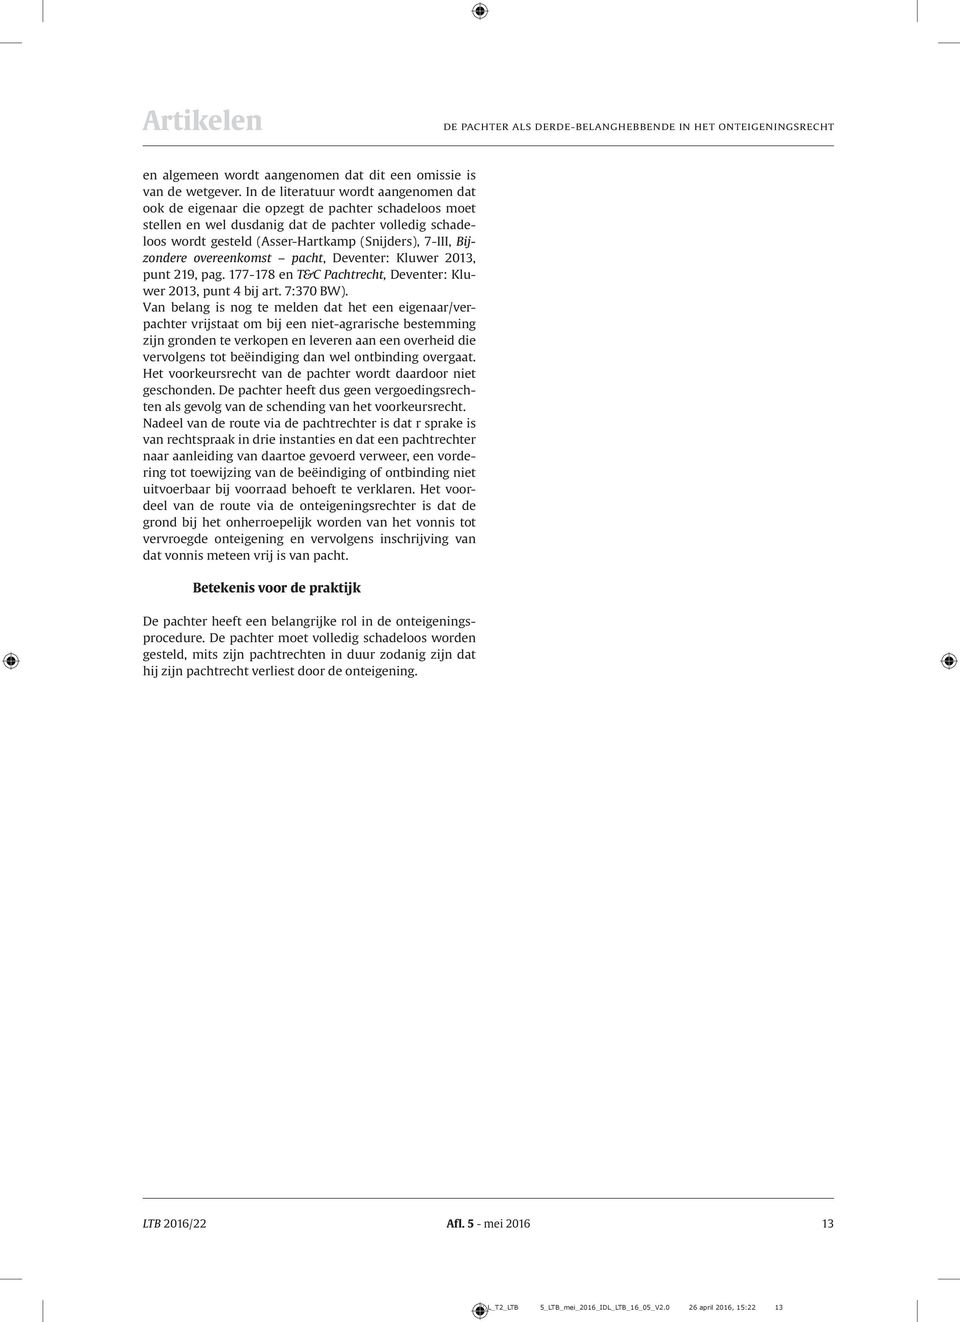 Bijzondere overeenkomst pacht, Deventer: Kluwer 2013, punt 219, pag. 177-178 en T&C Pachtrecht, Deventer: Kluwer 2013, punt 4 bij art. 7:370 BW).